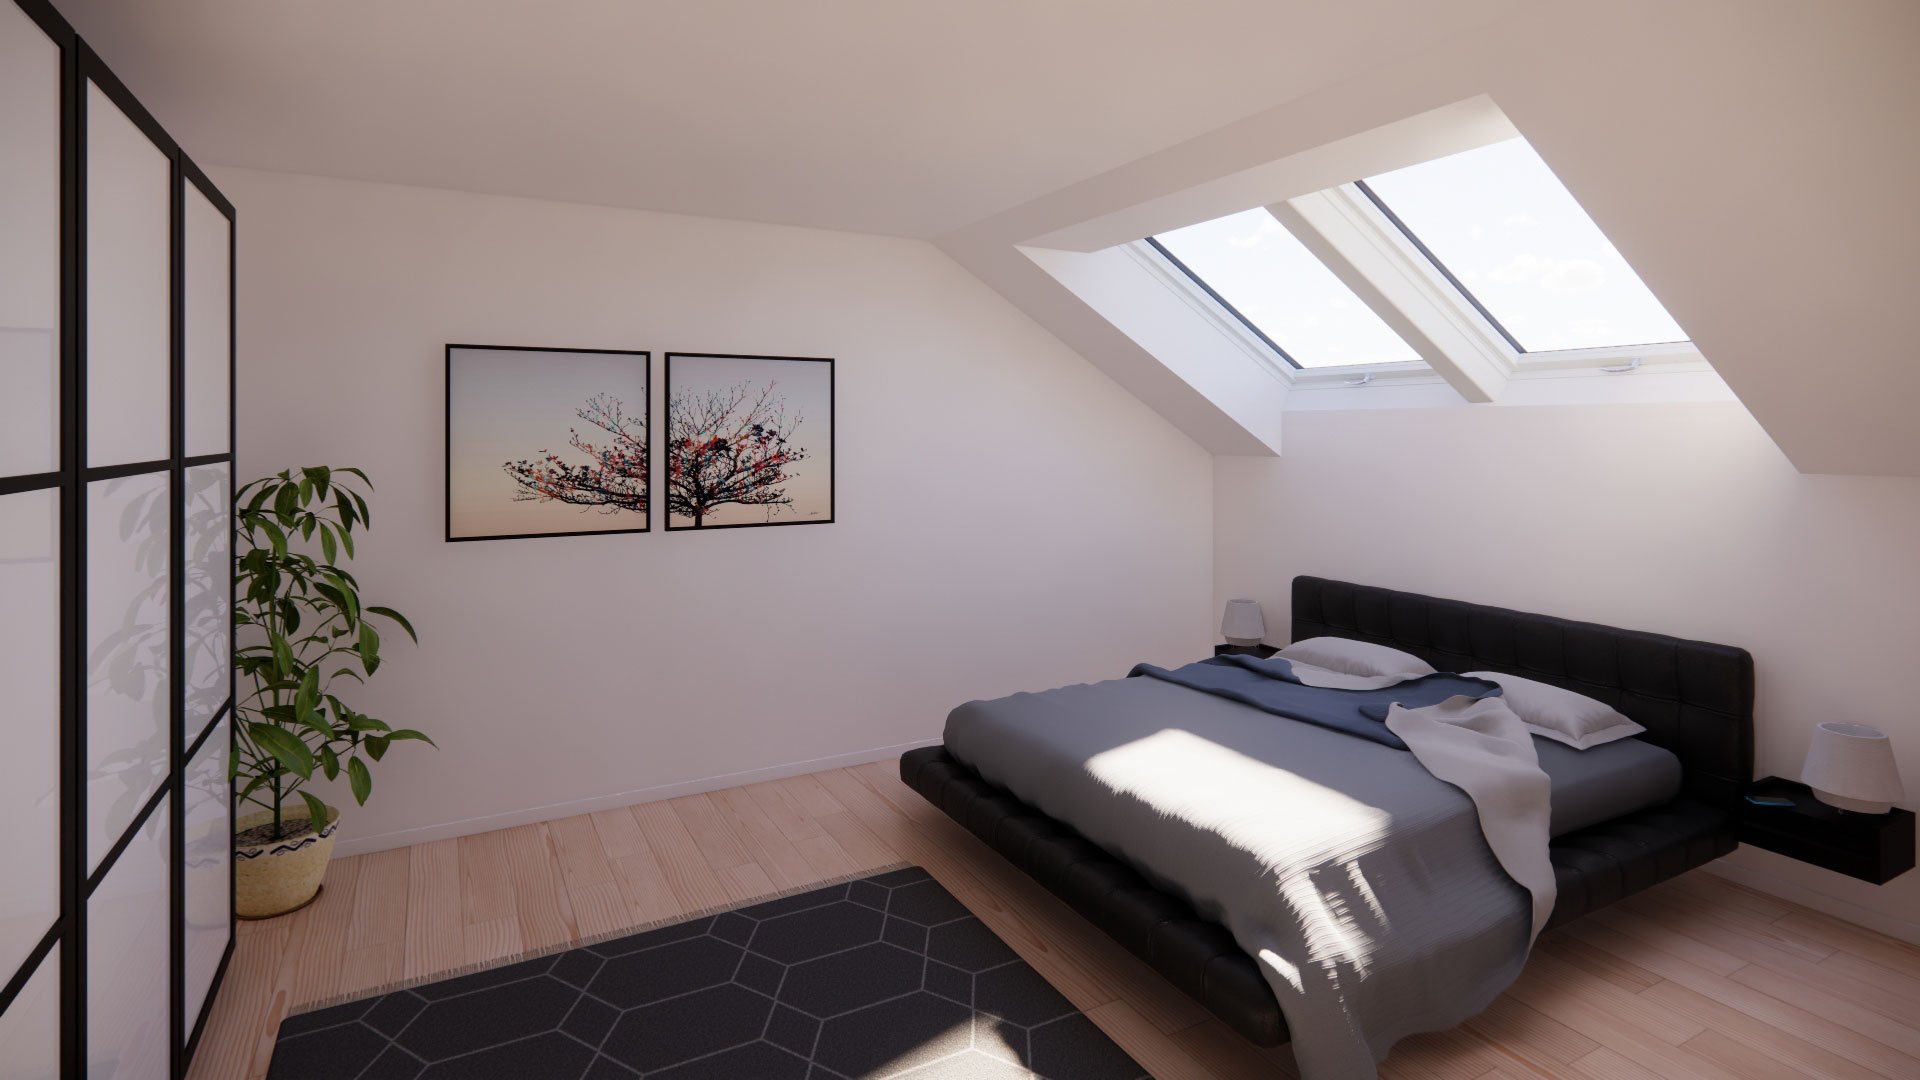 daylight-advisor-example-bedroom-1920x1080px